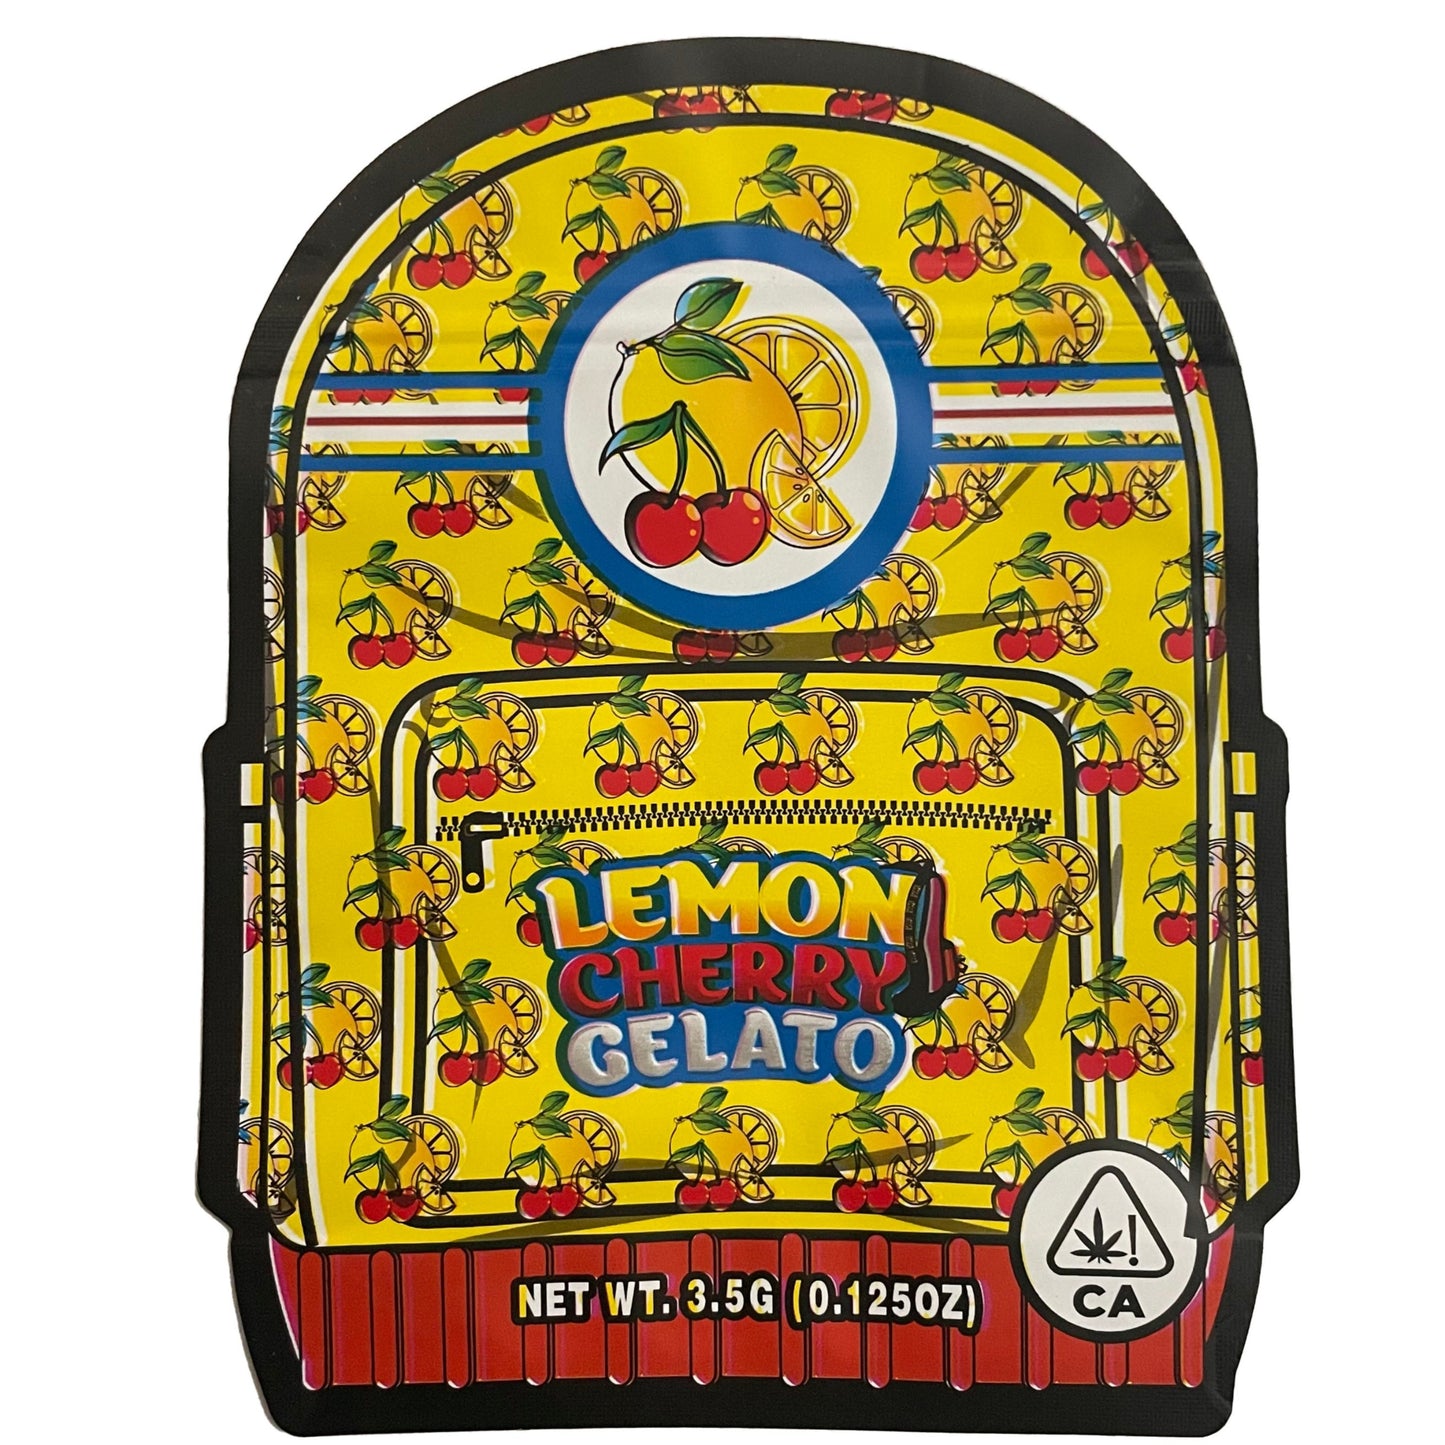 Lemon Cherry Gelato 3.5G Mylar Bags